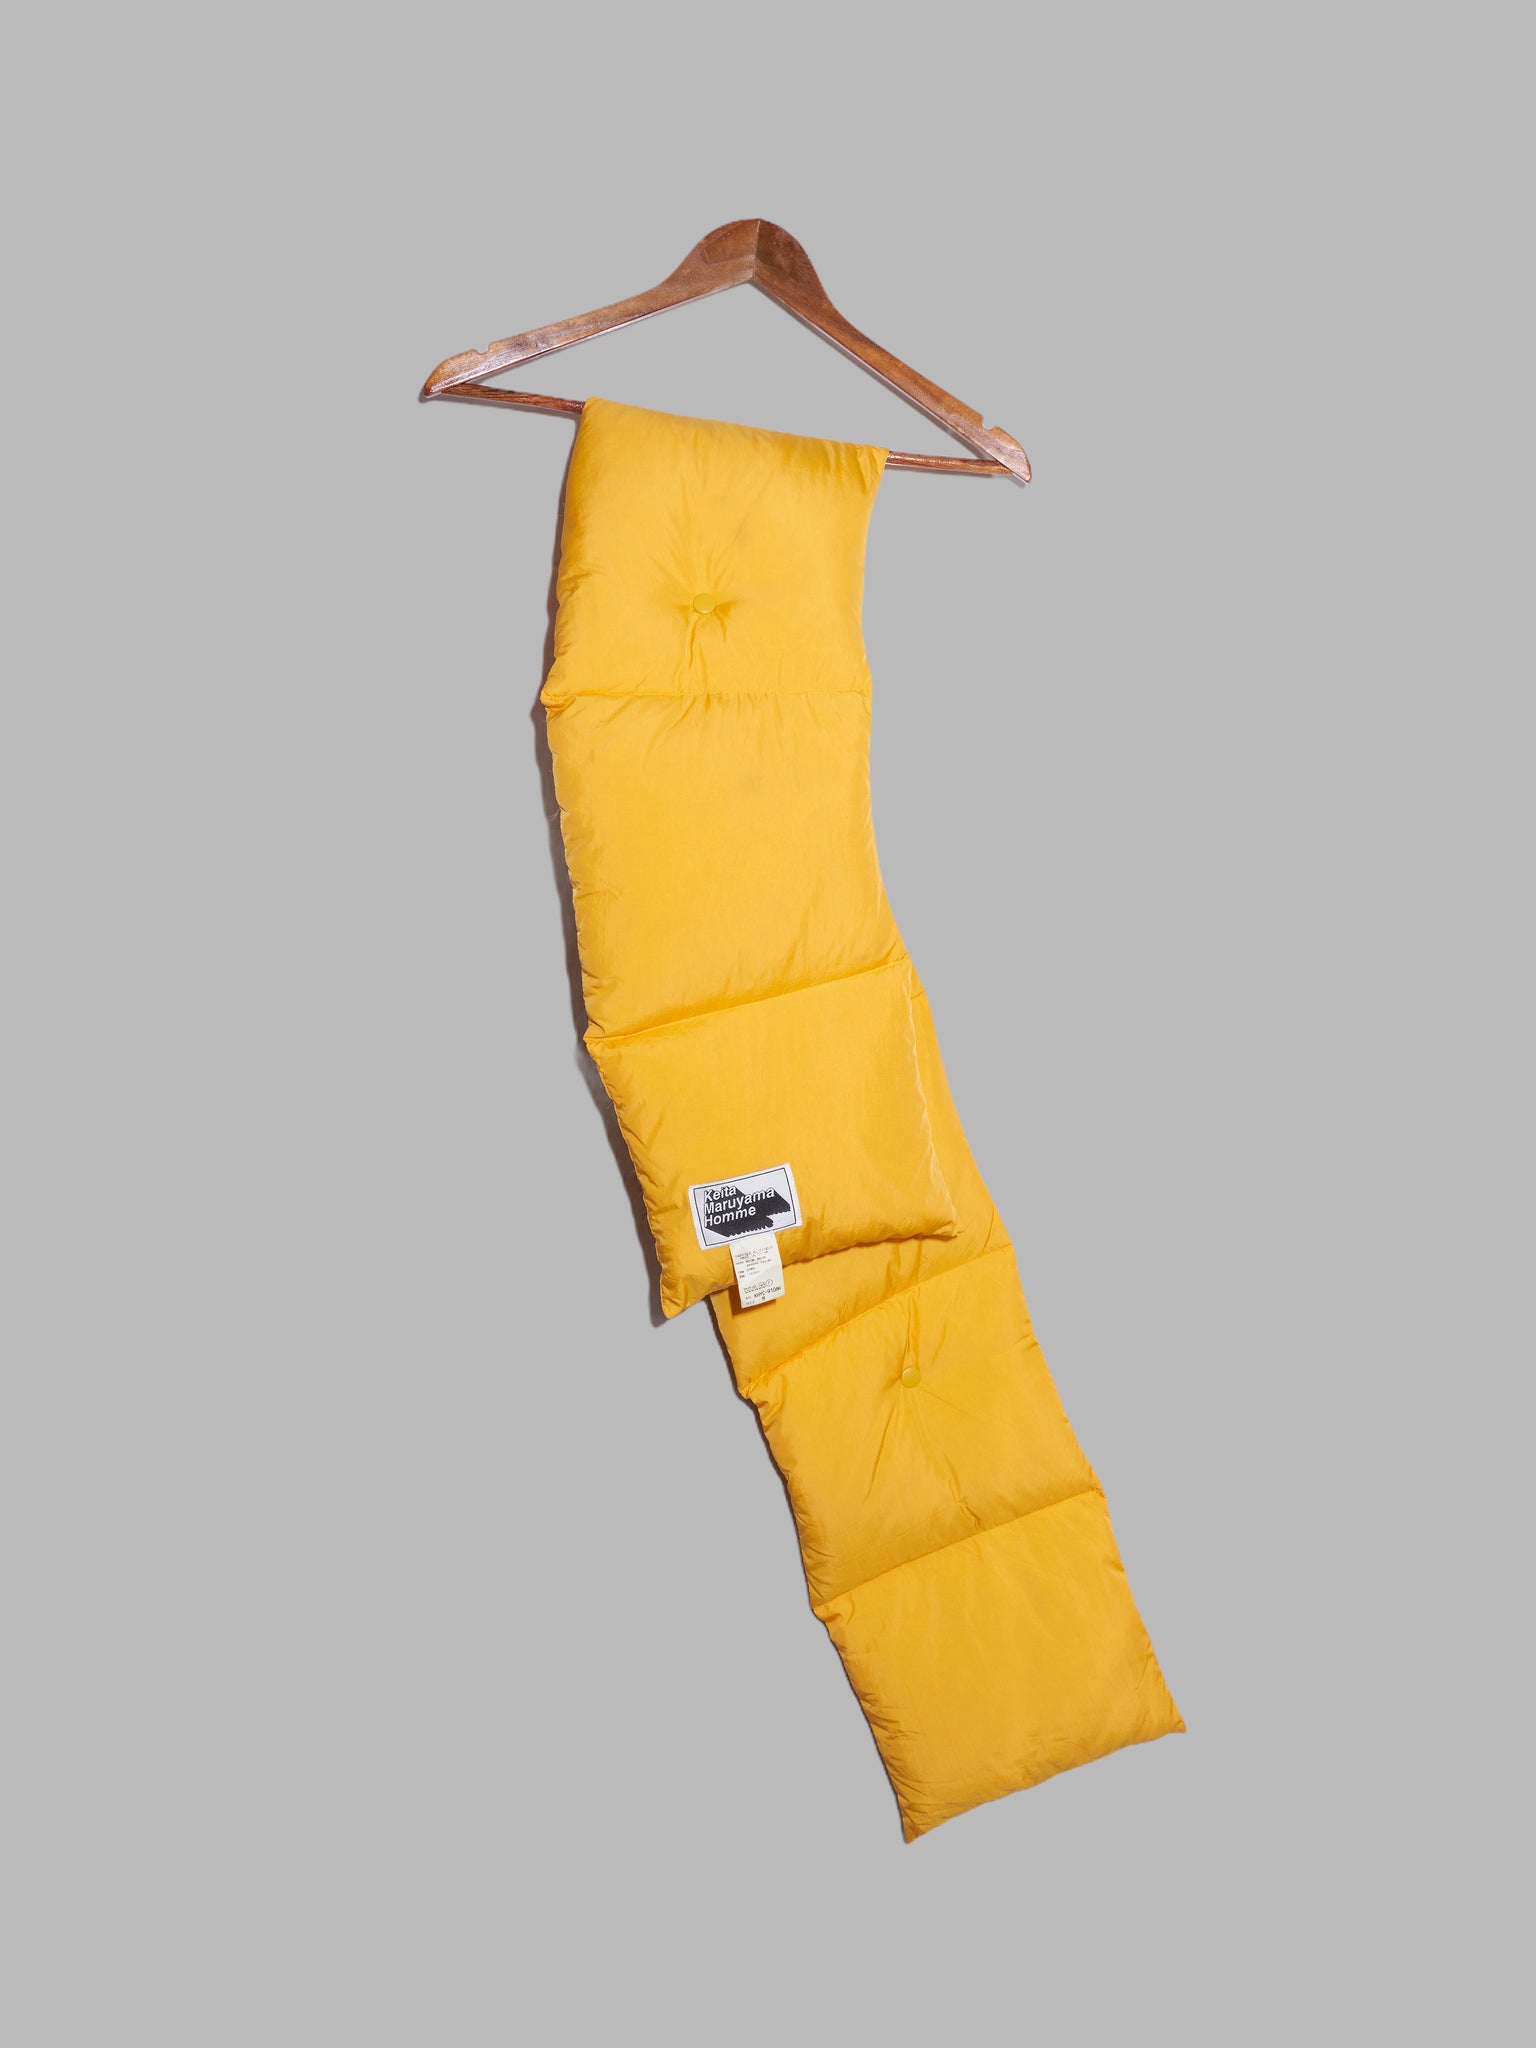 Keita Maruyama Homme yellow nylon down puffer scarf